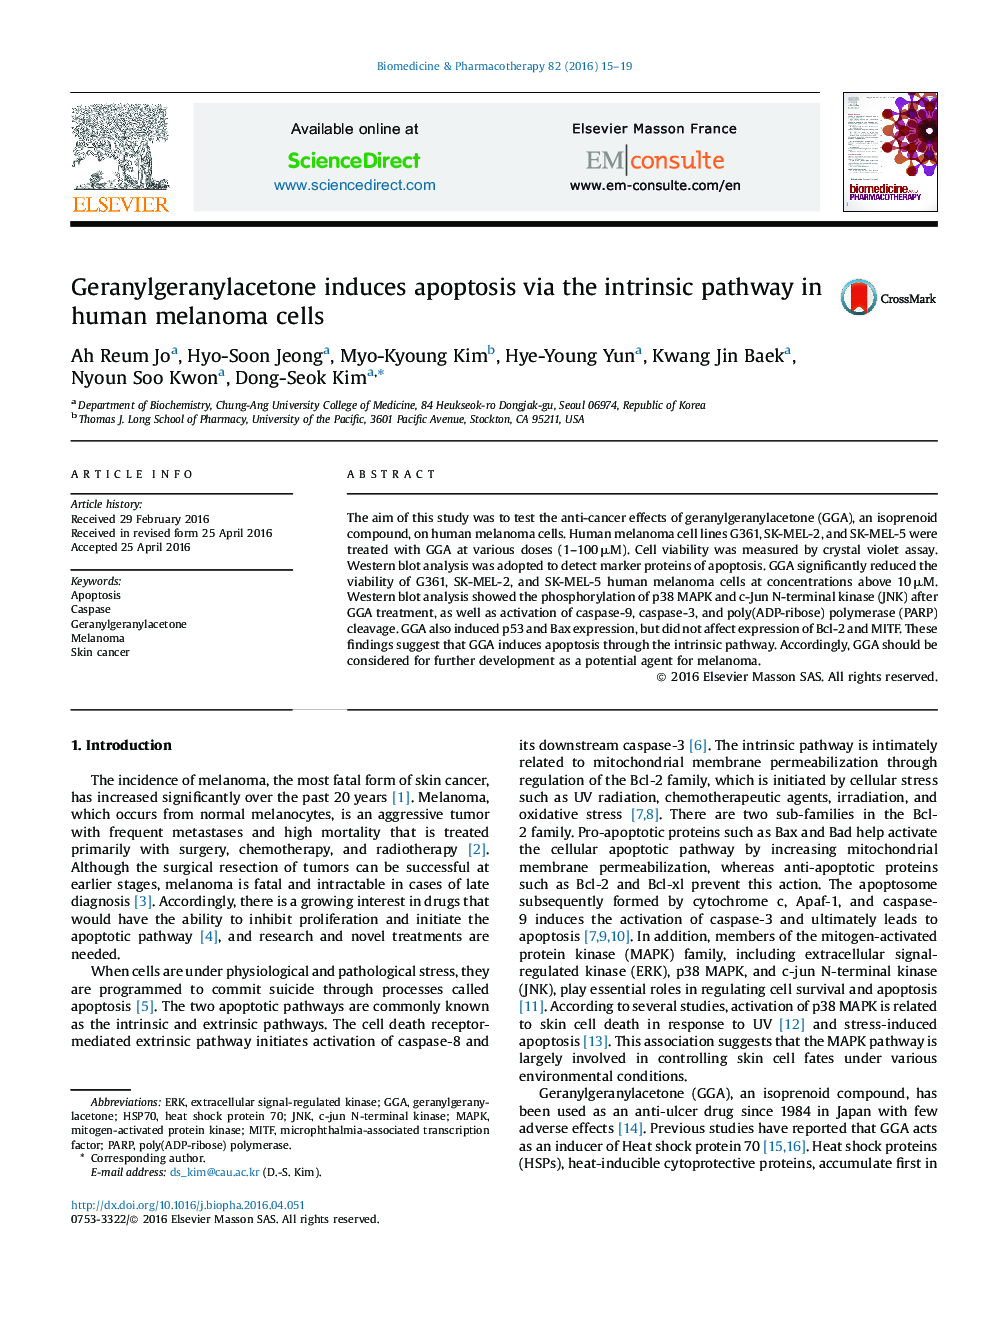 Geranylgeranylacetone induces apoptosis via the intrinsic pathway in human melanoma cells